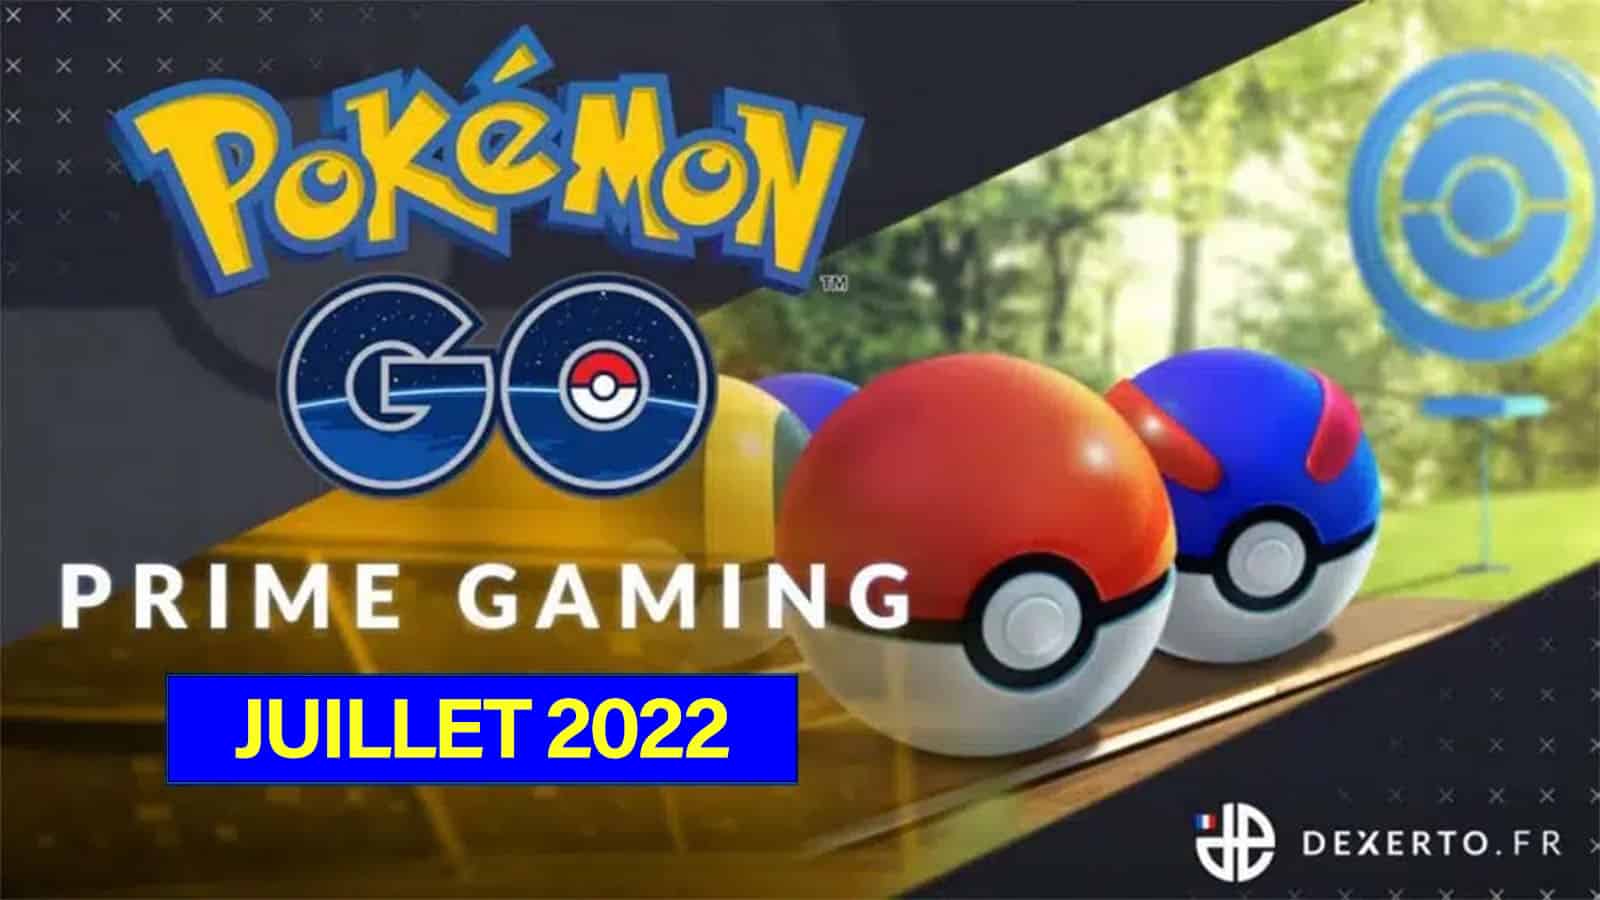 Prime Gaming Pokémon Go